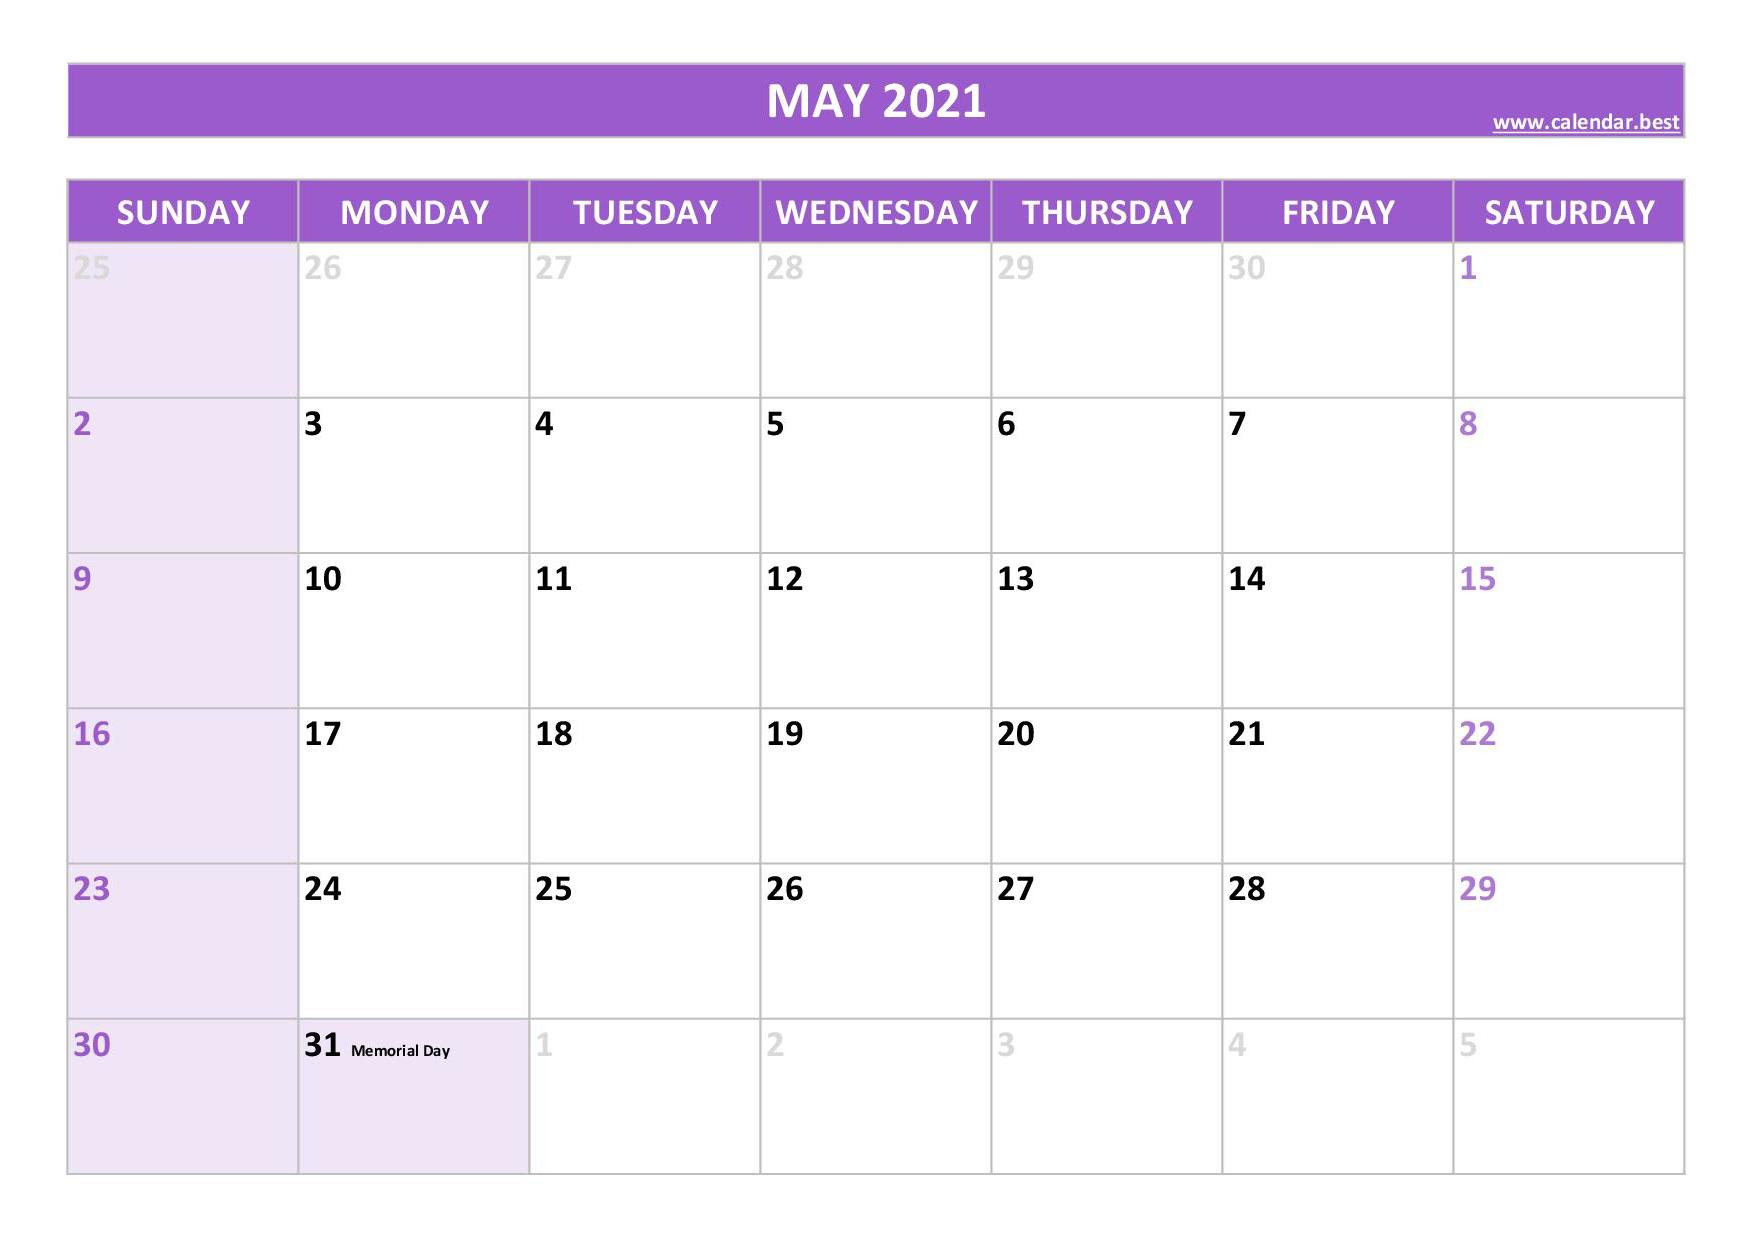 May 2021 Calendar -Calendar.best-Calendar May 2021